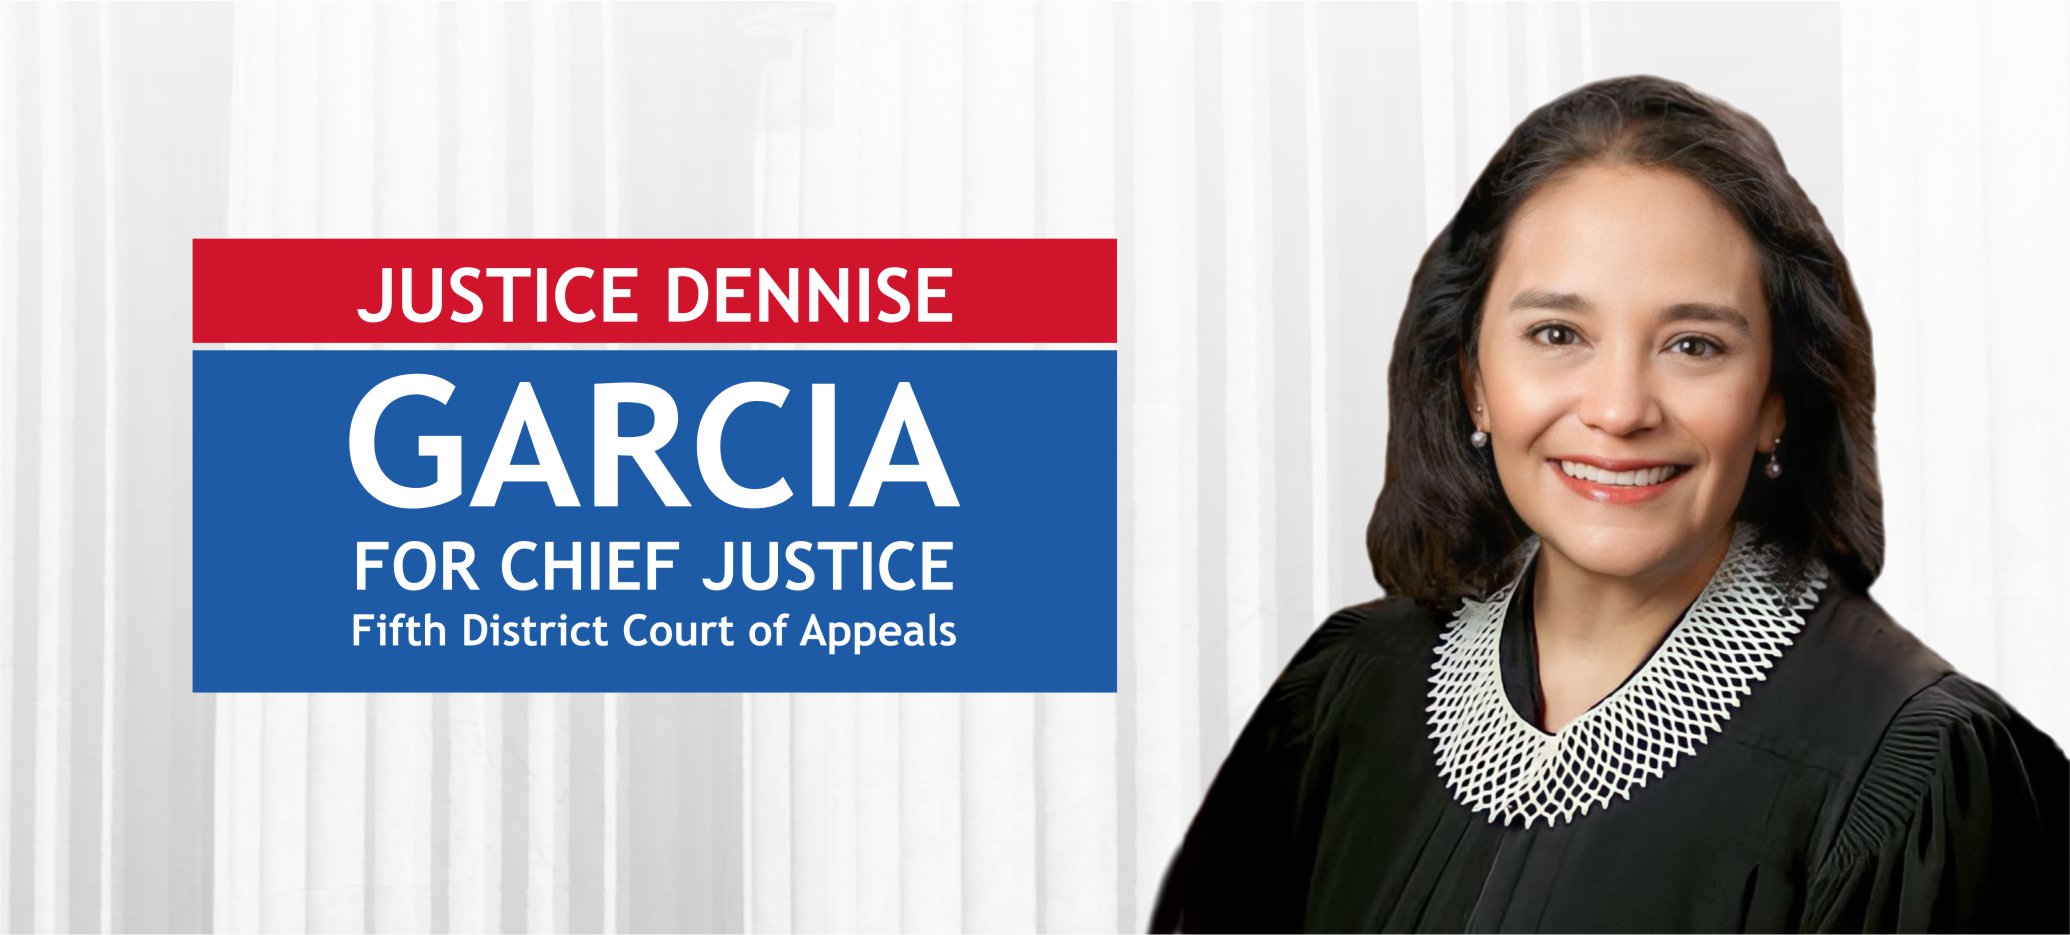 Justice Dennise Garcia logo